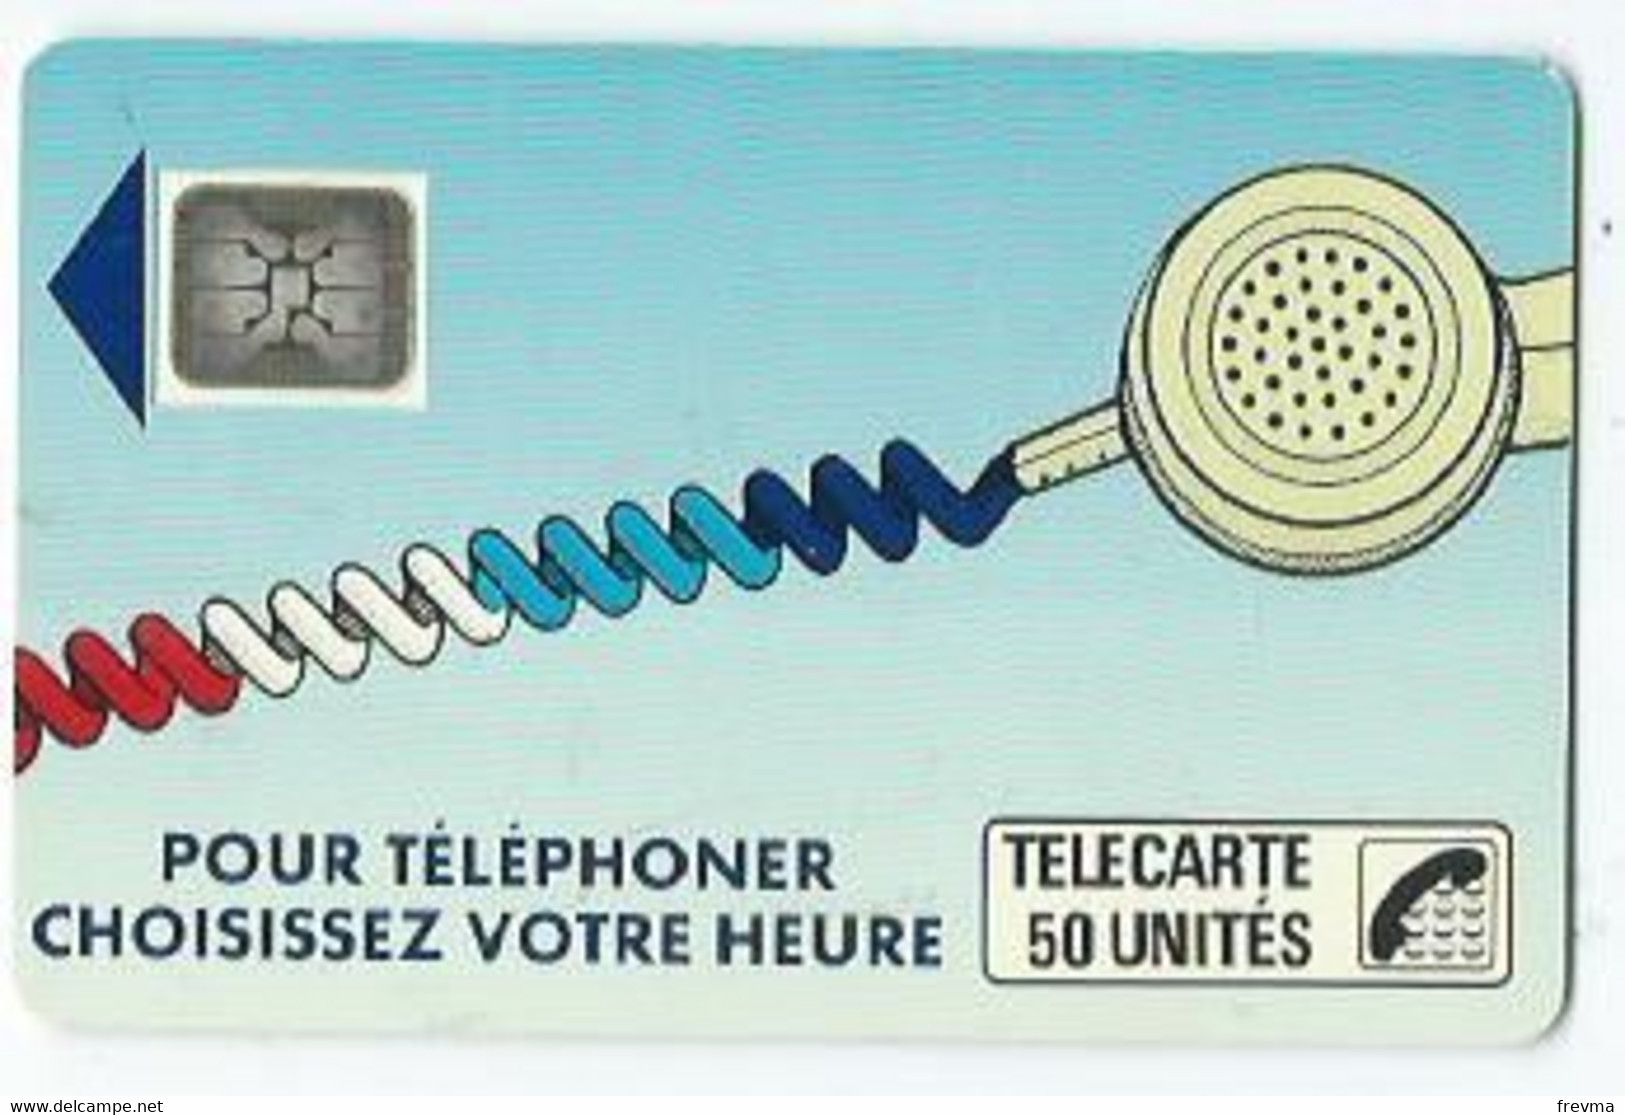 Telecarte Cordon K 27B 510 - Telefonschnur (Cordon)